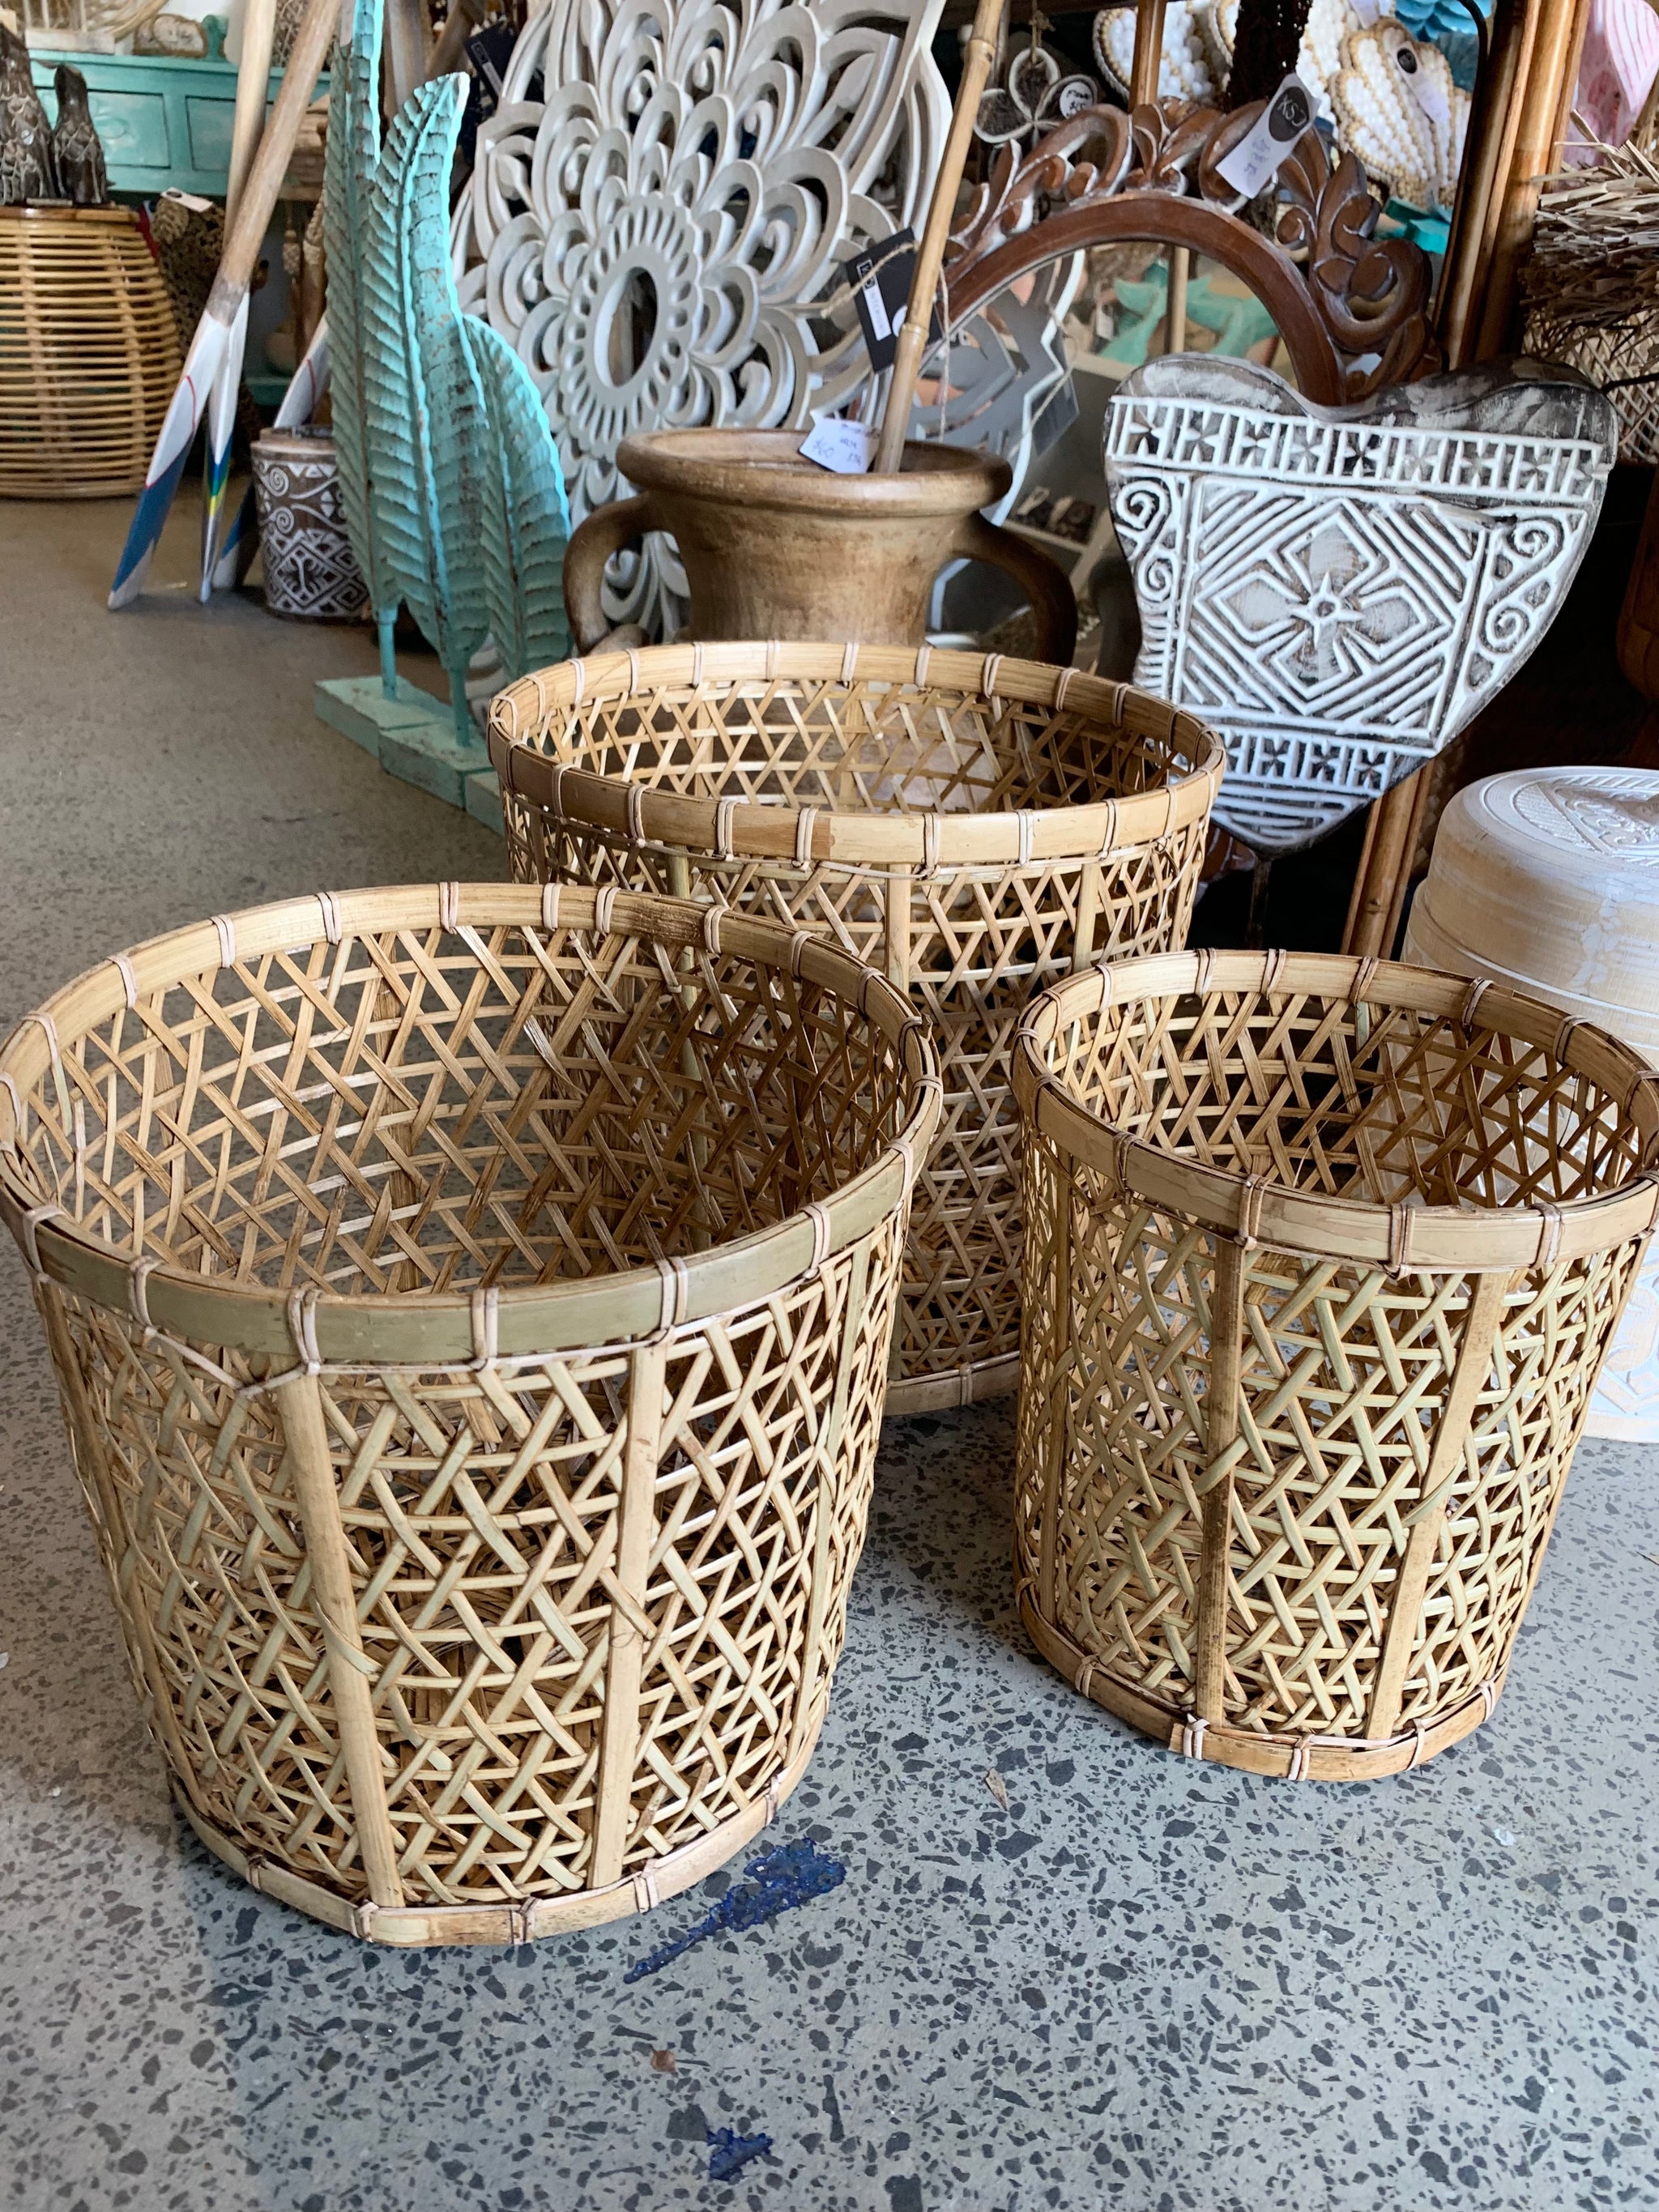 Natural Set 3 Woven Baskets. Usually $70